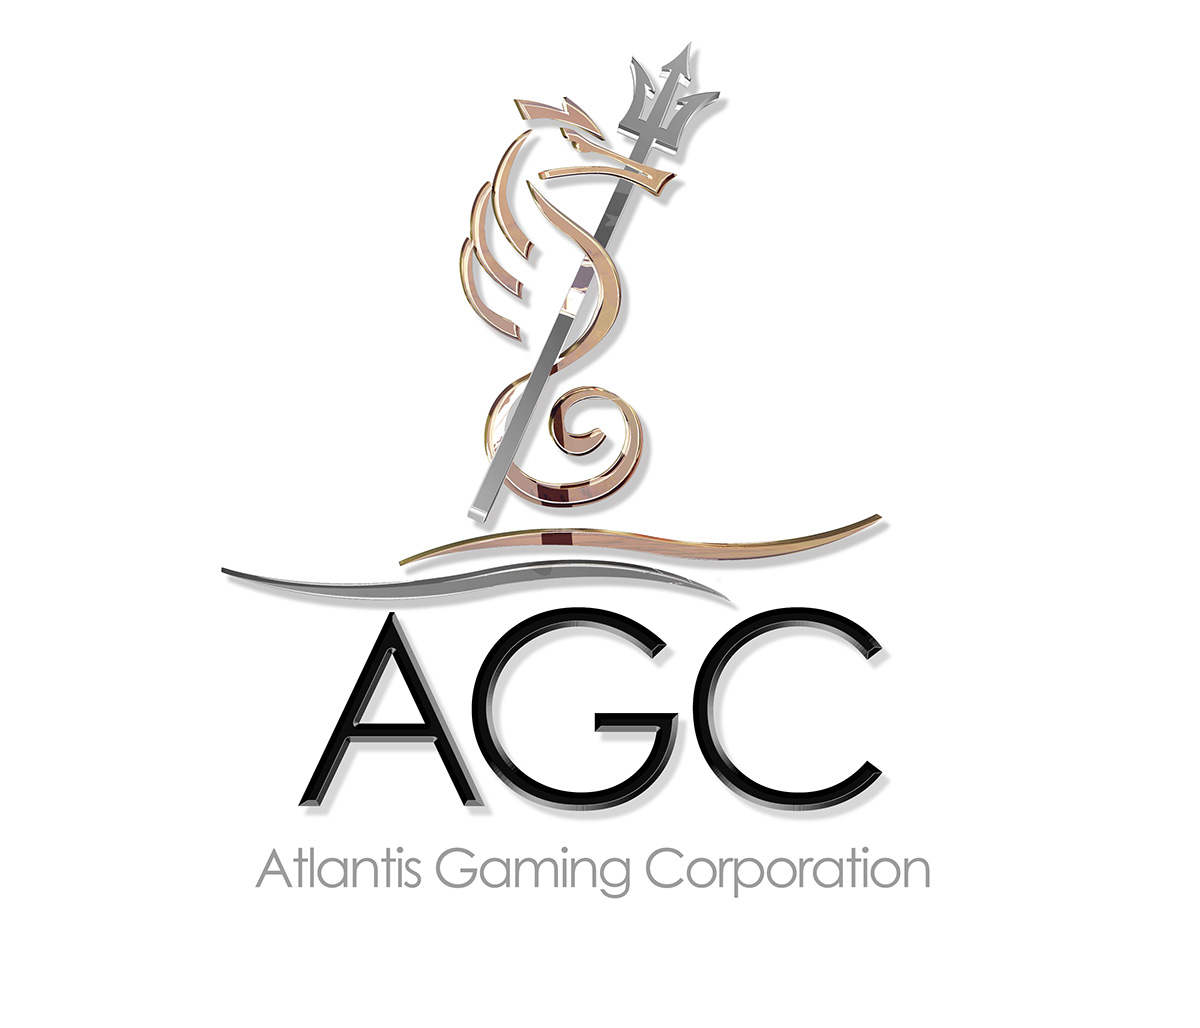 321-agc-logo-large-wave.jpg